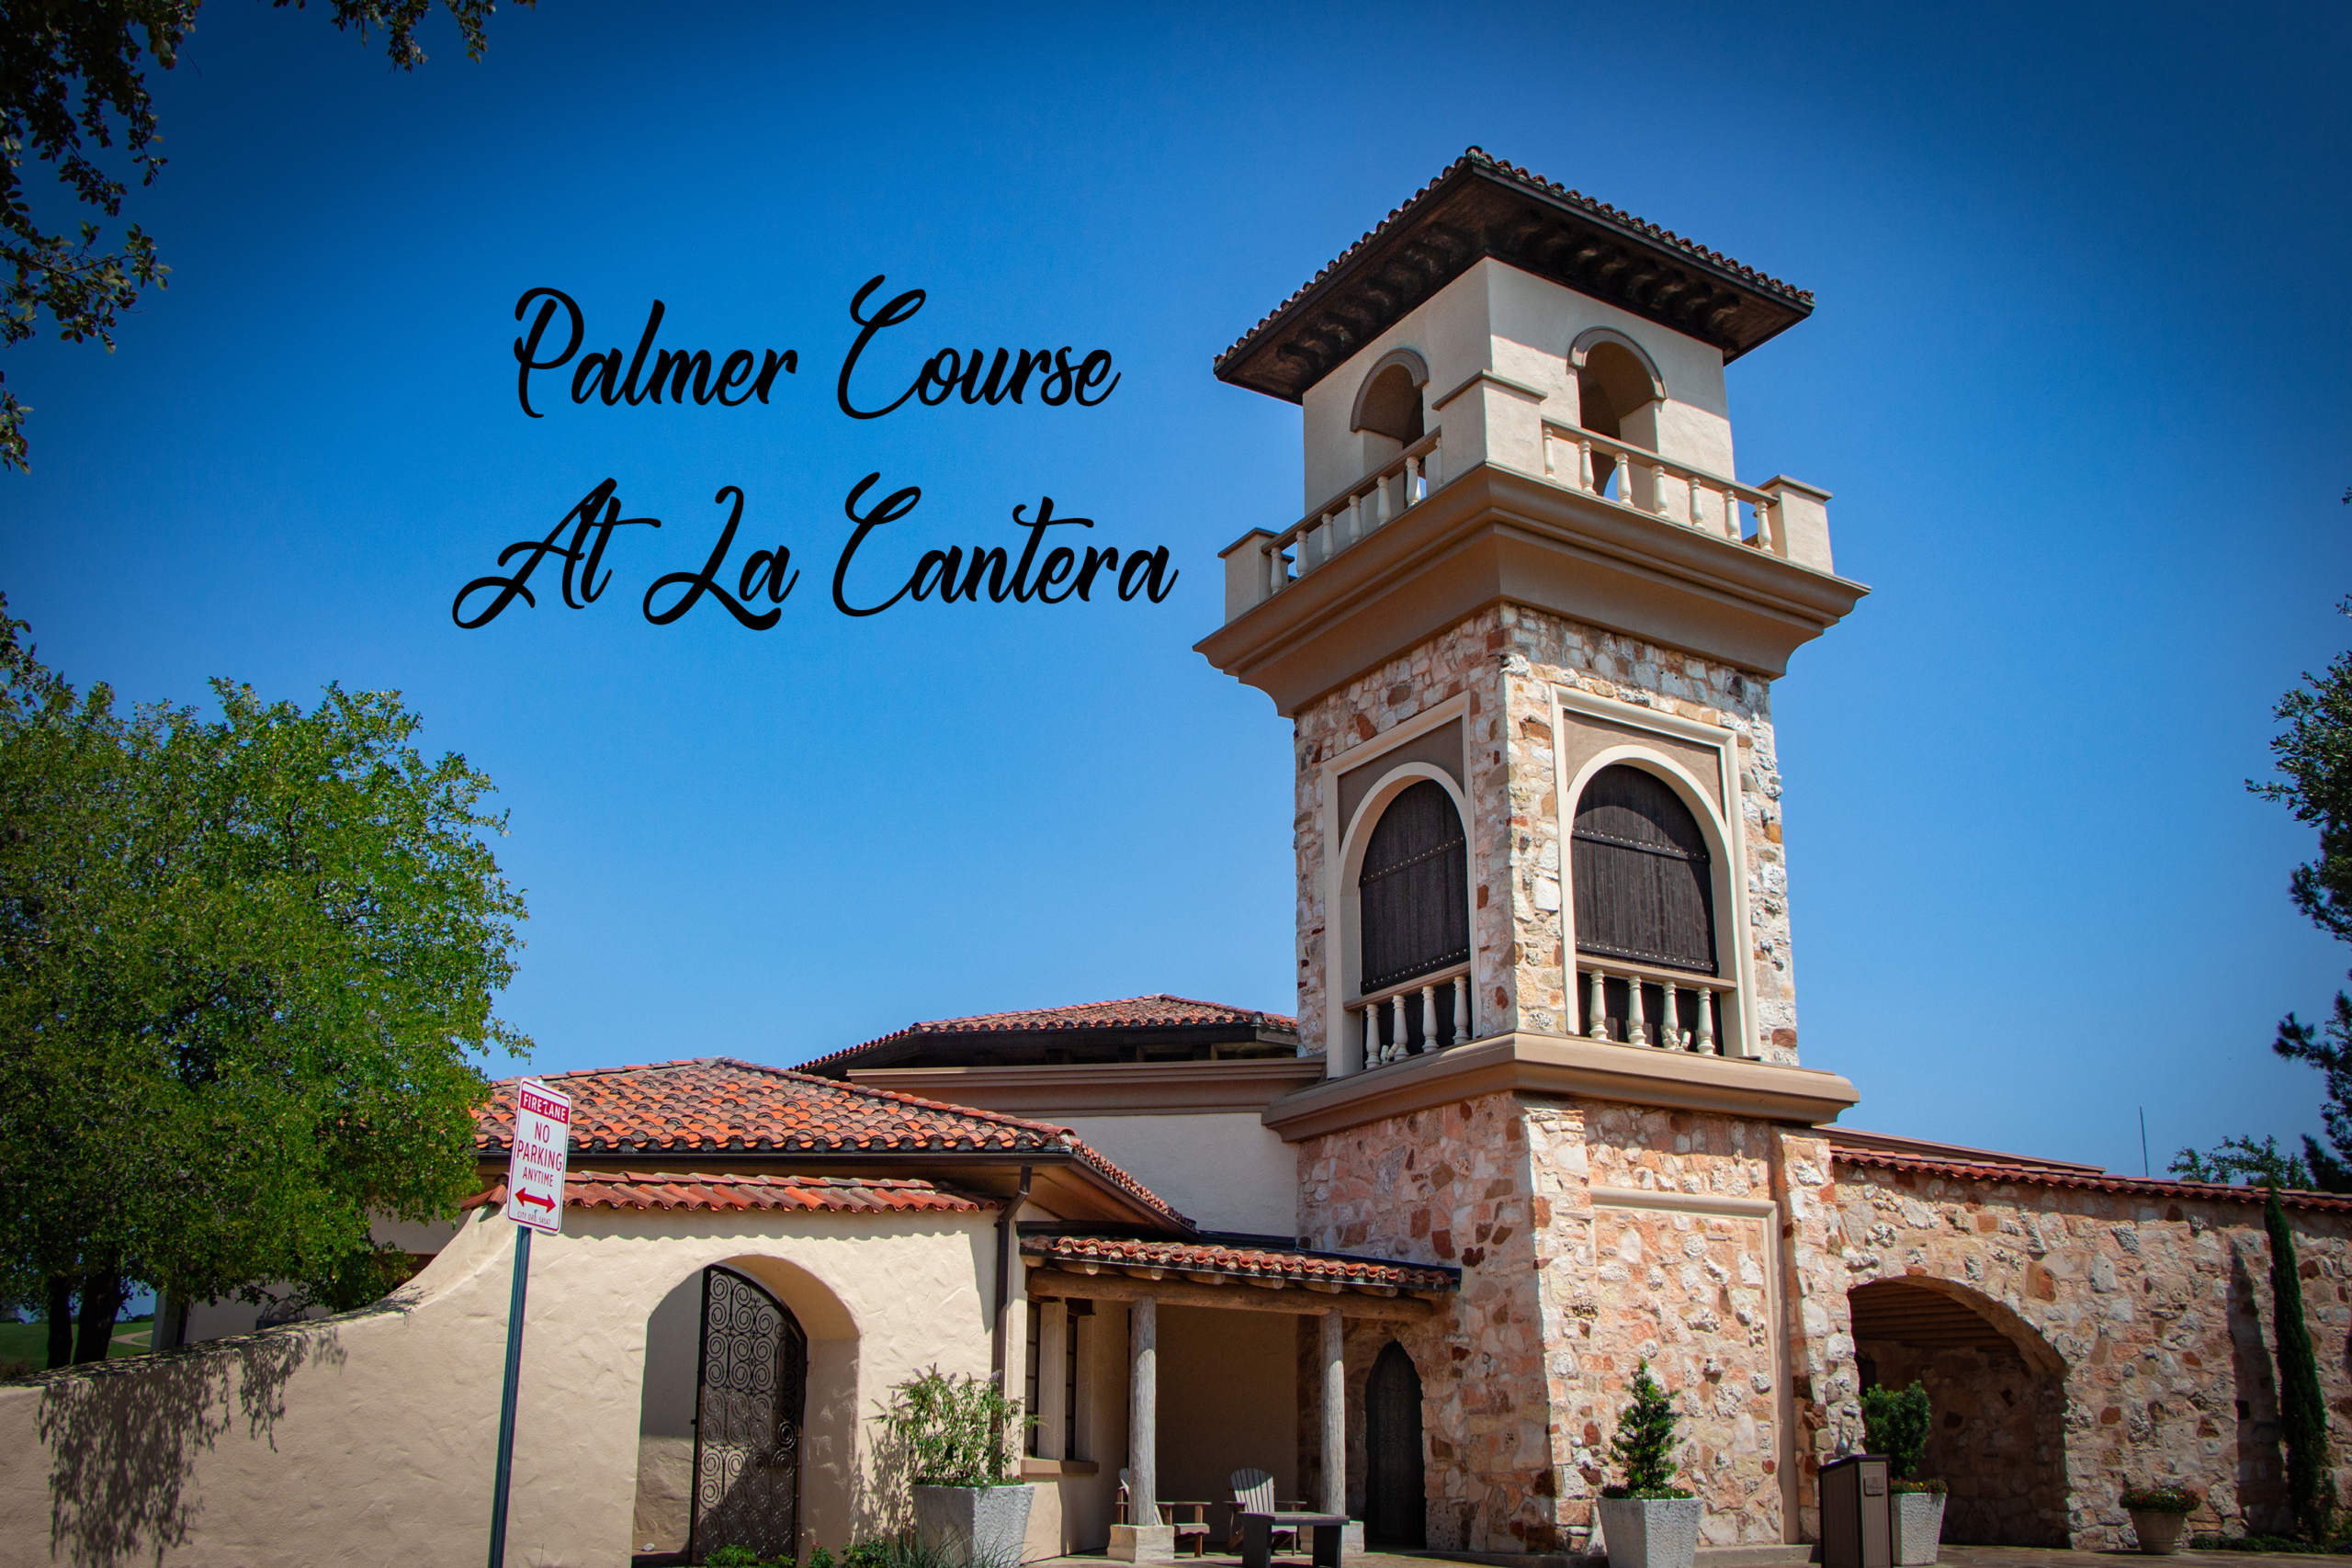 Palmer Golf Course at La Cantera in San Antonio, Texas